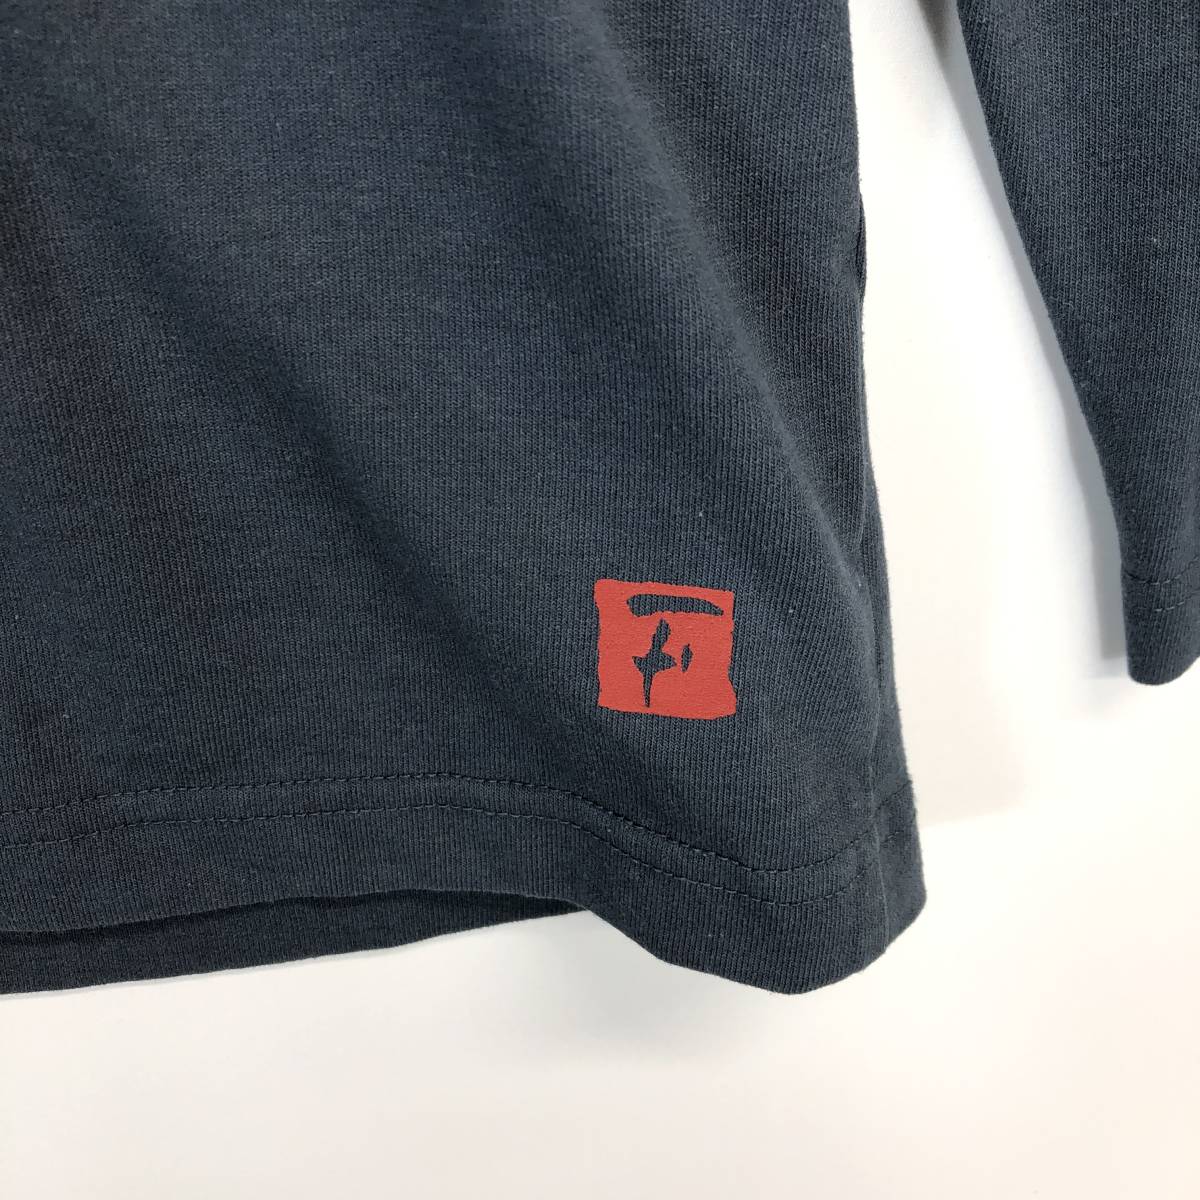 Foxfire Foxfire long sleeve T shirt poly- rayon XL size 5215516